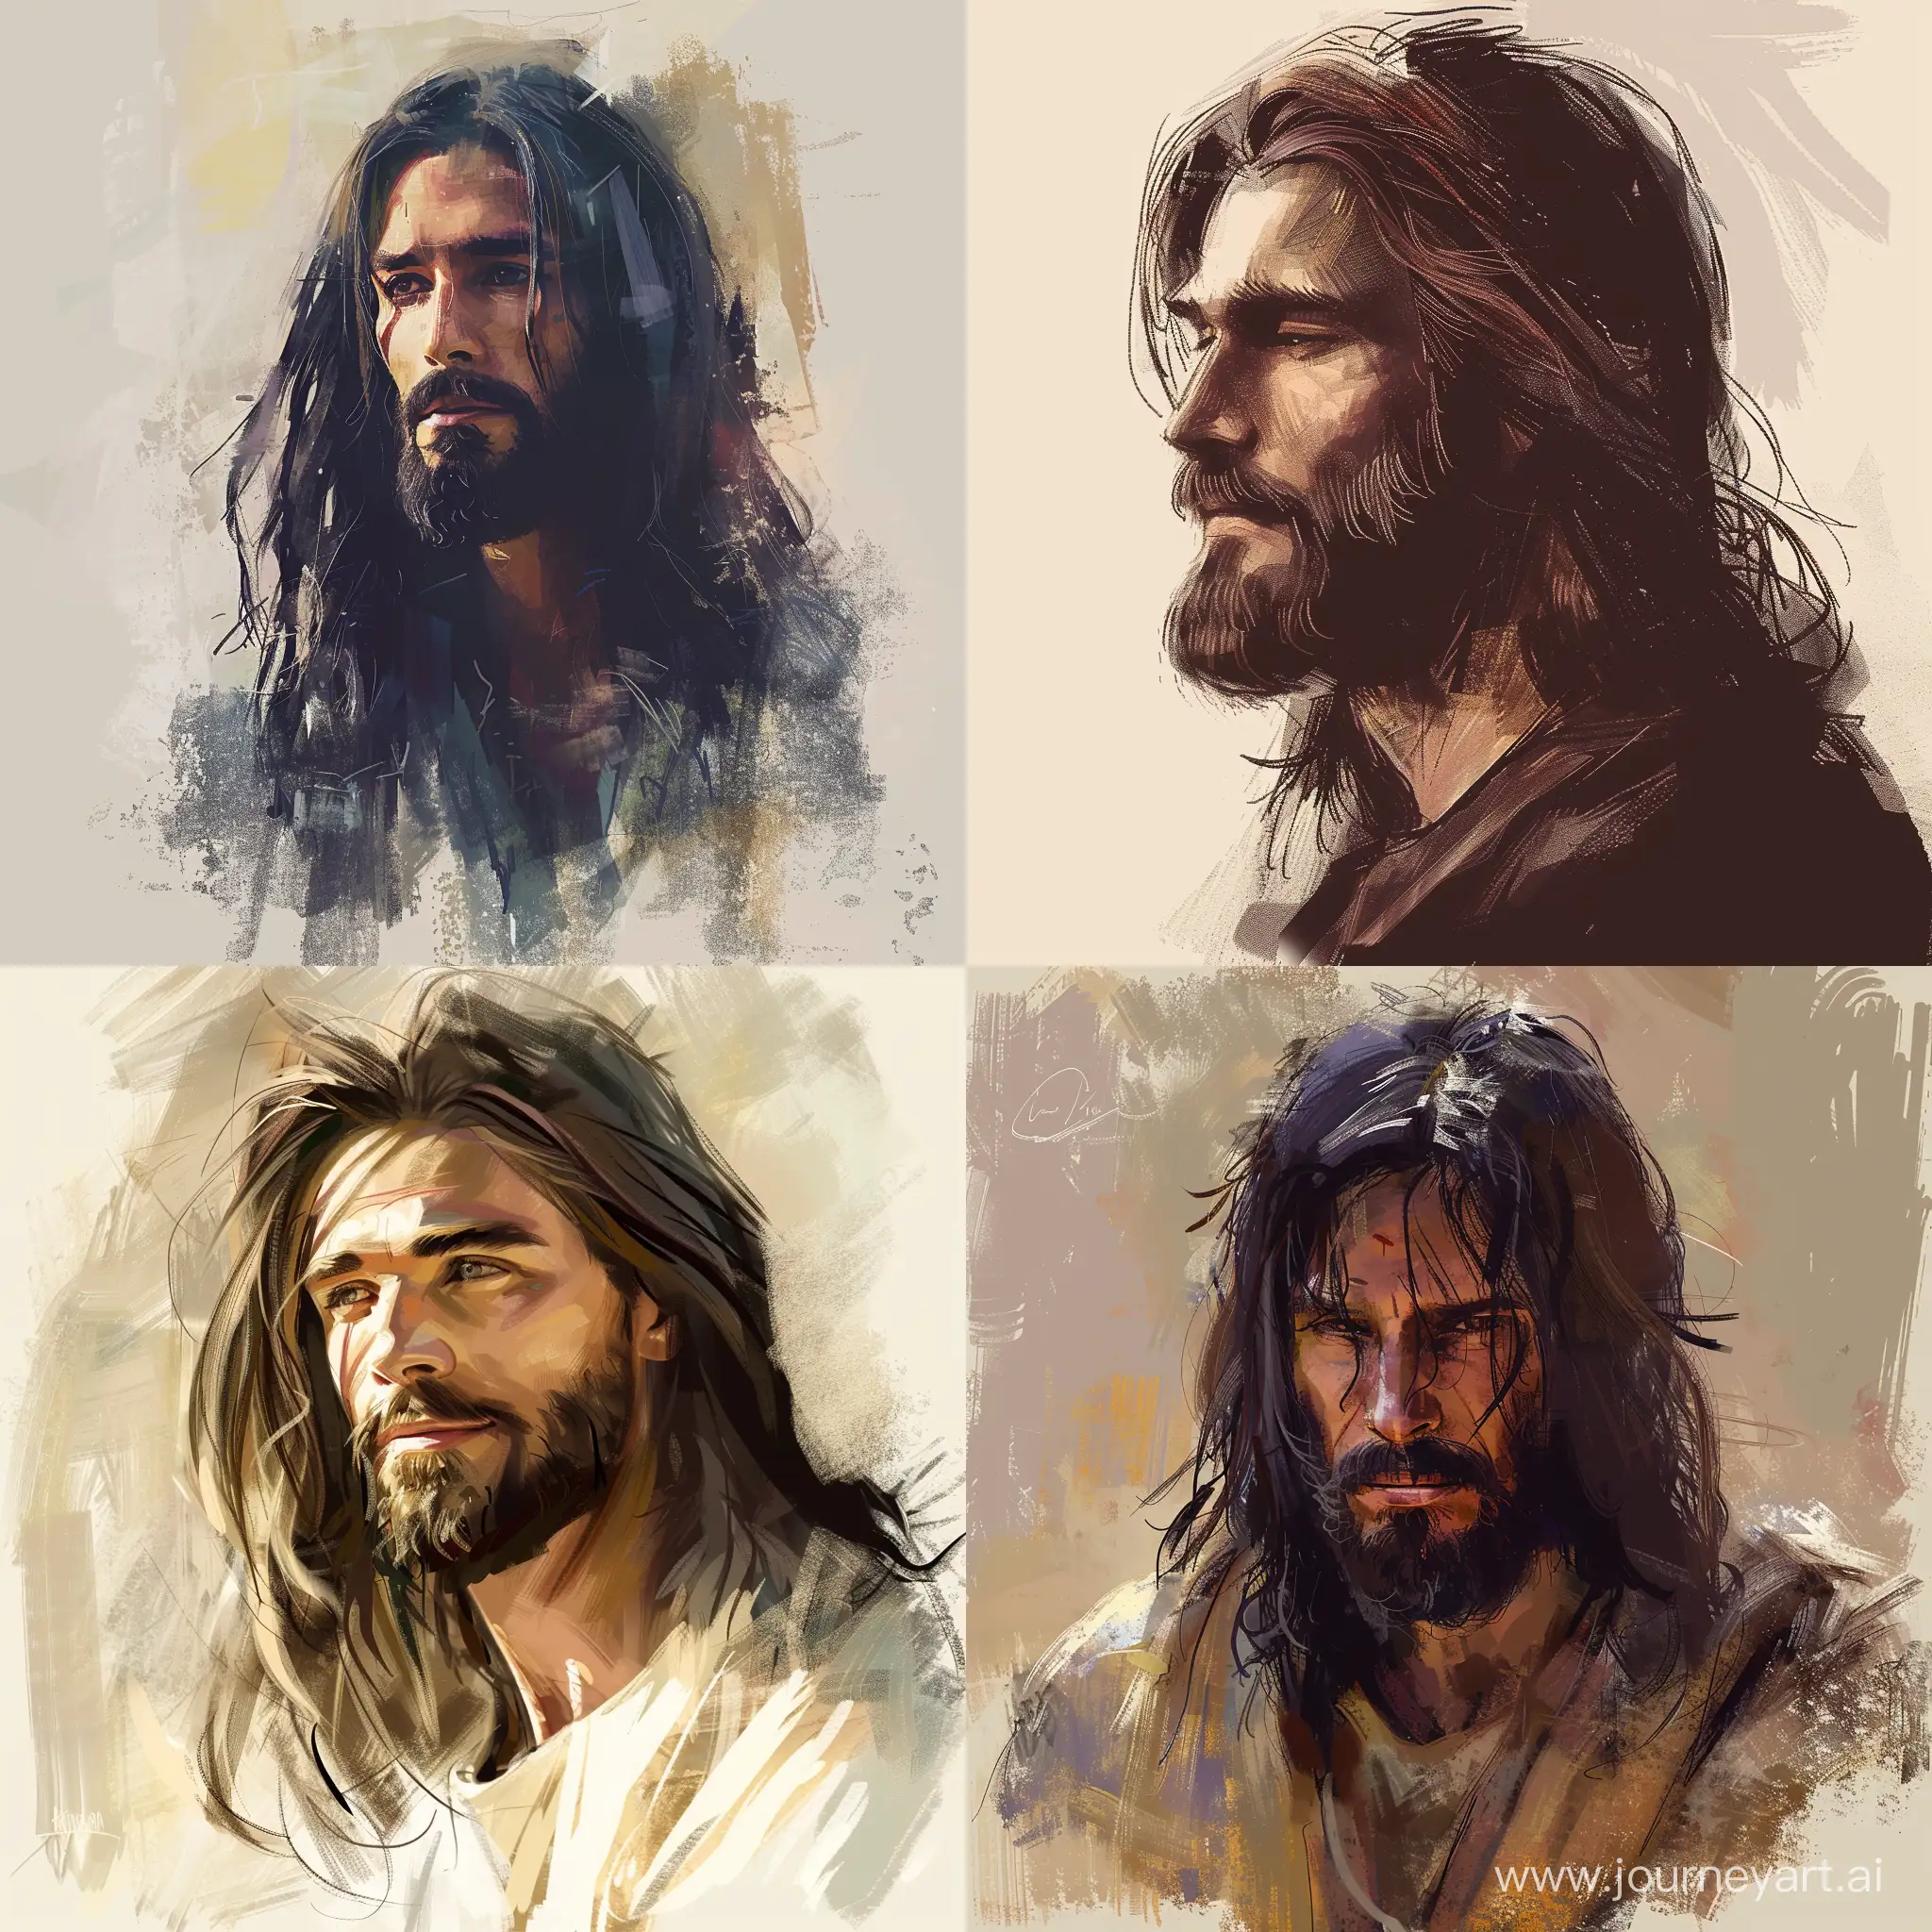 Inspiring portrait of Jesus Christ. Digital art, sketch.